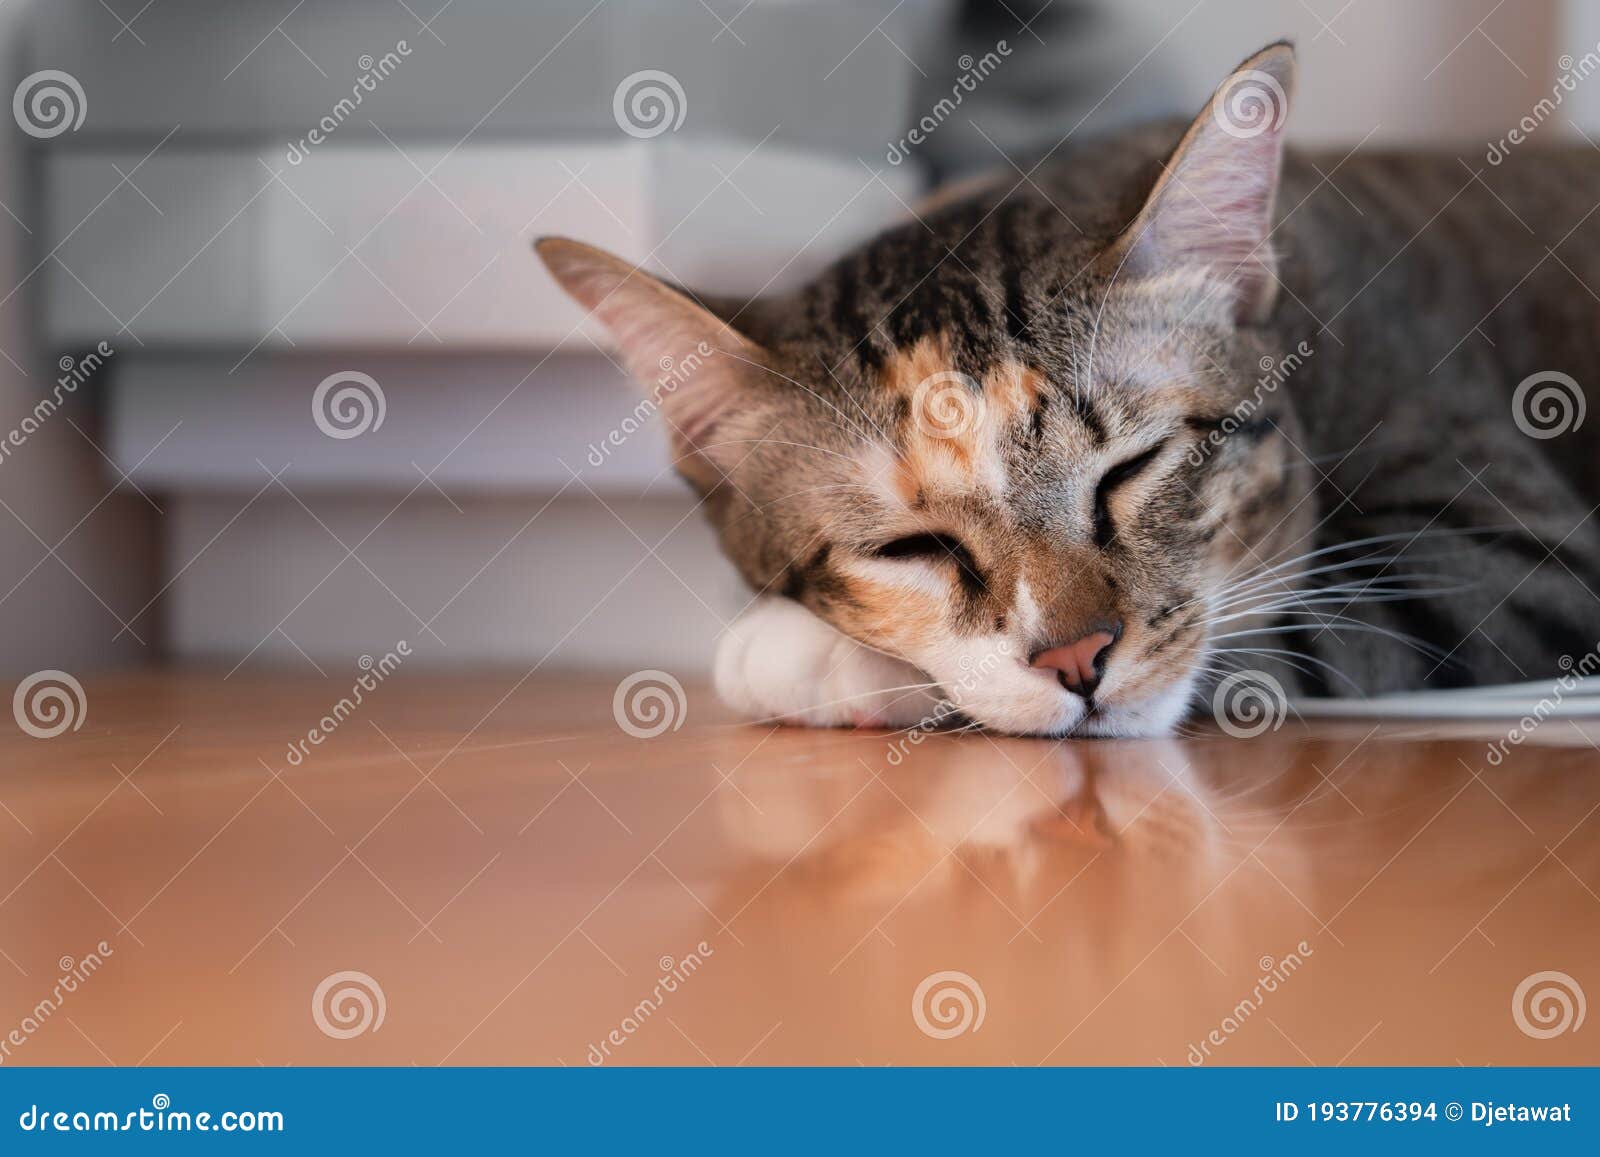 portrait of asia short hair with black tubby cat lying sleep on table